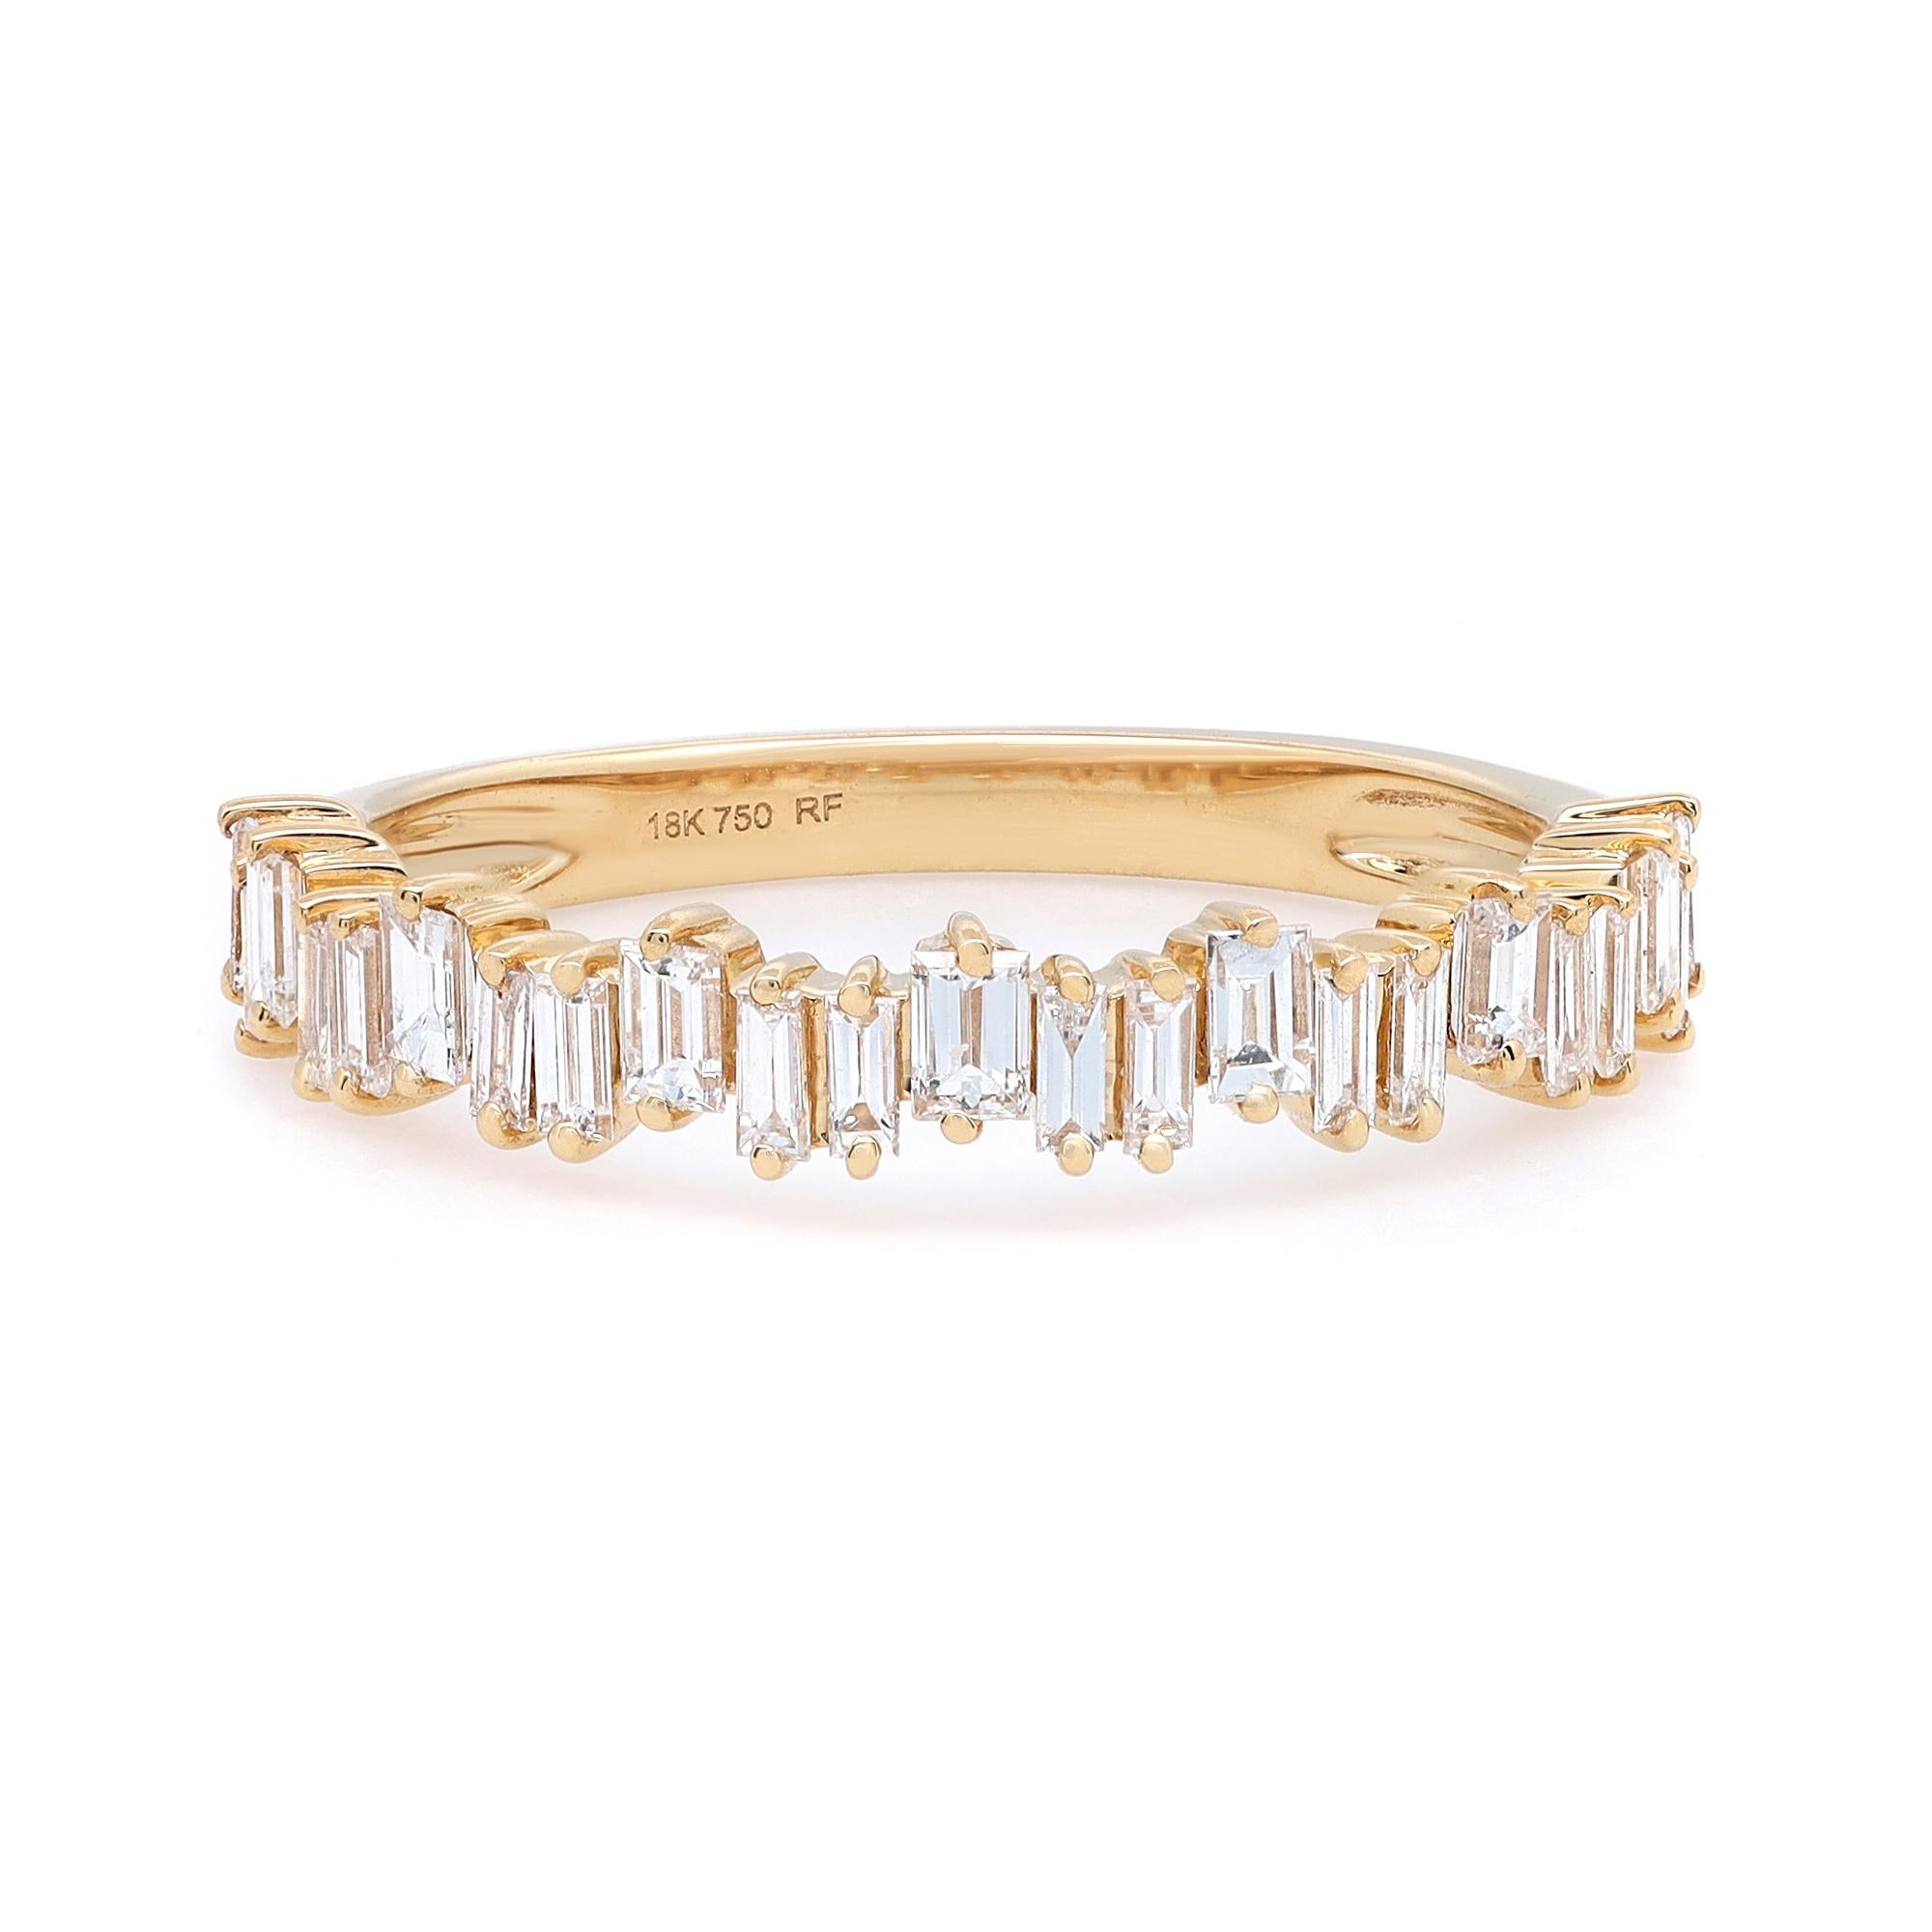 Rachel Koen 0.64Cttw Baguette Cut Diamond Ring 18K Yellow Gold For Sale